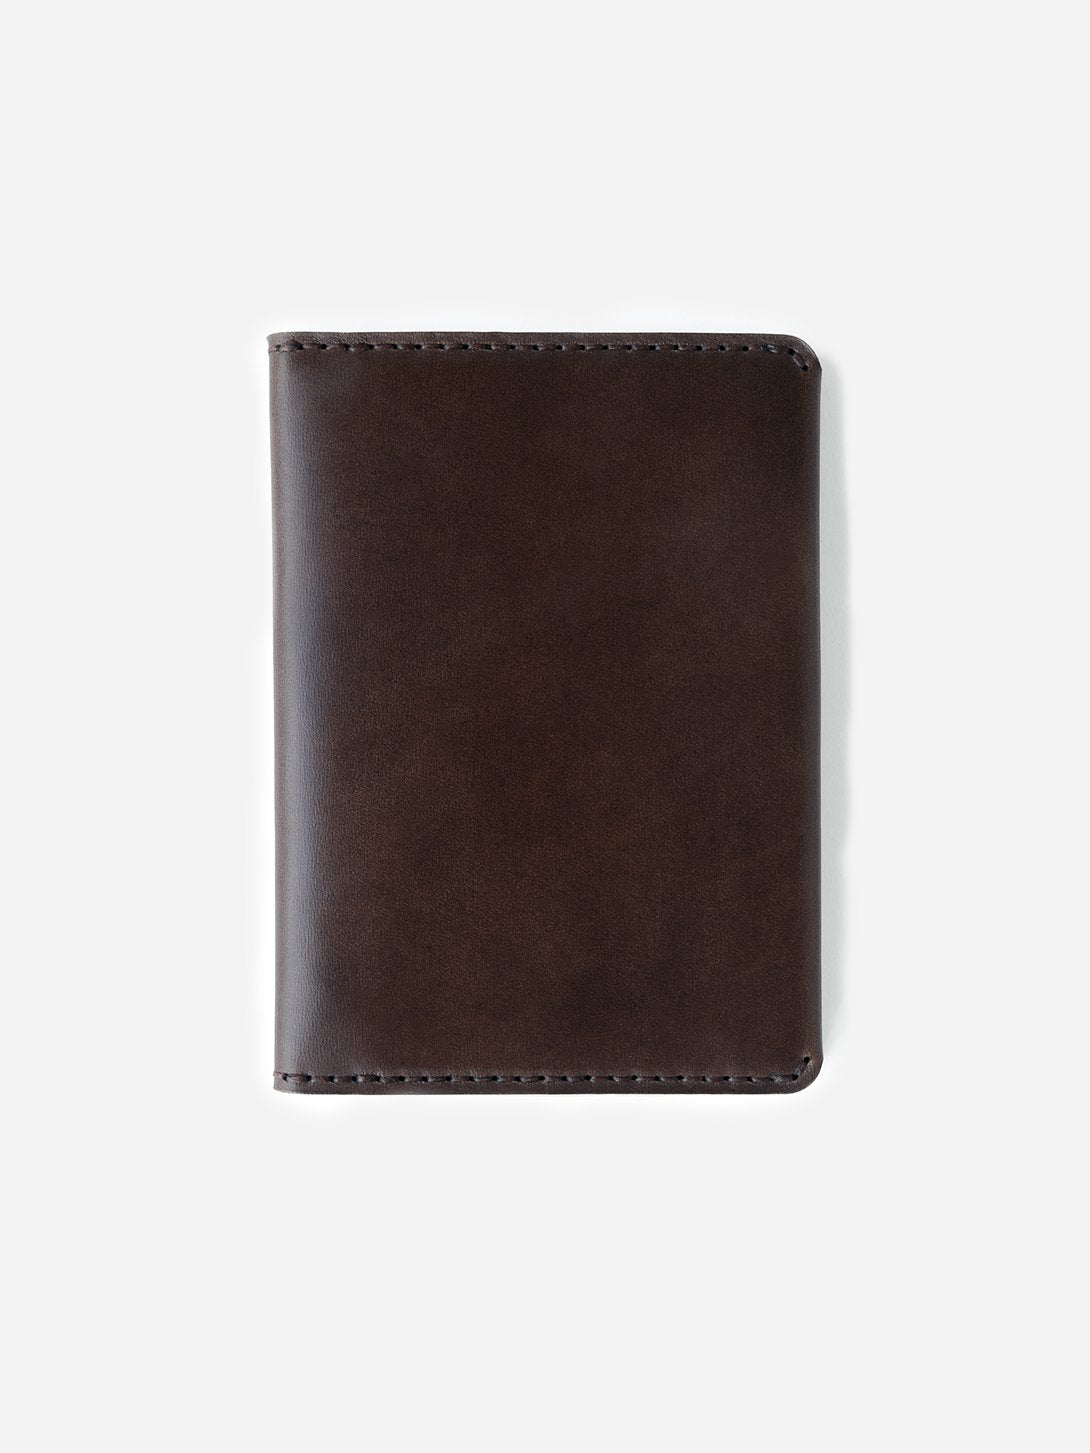 BARK mens leather wallet brown bifold passport wallet makr